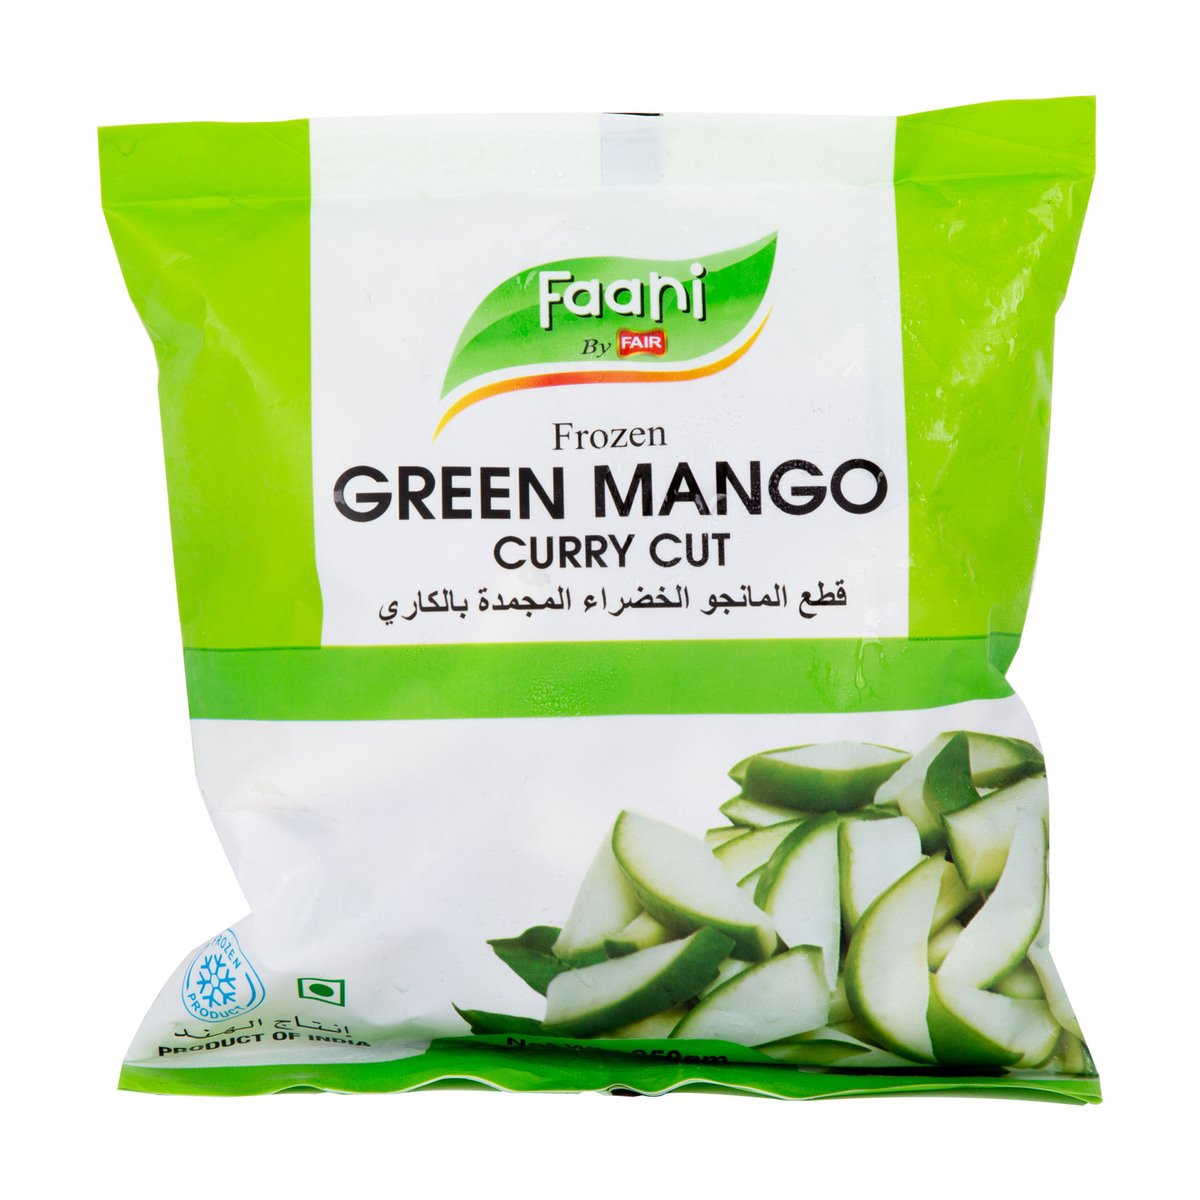 Faani Frozen Green Mango Curry Cut 250 g